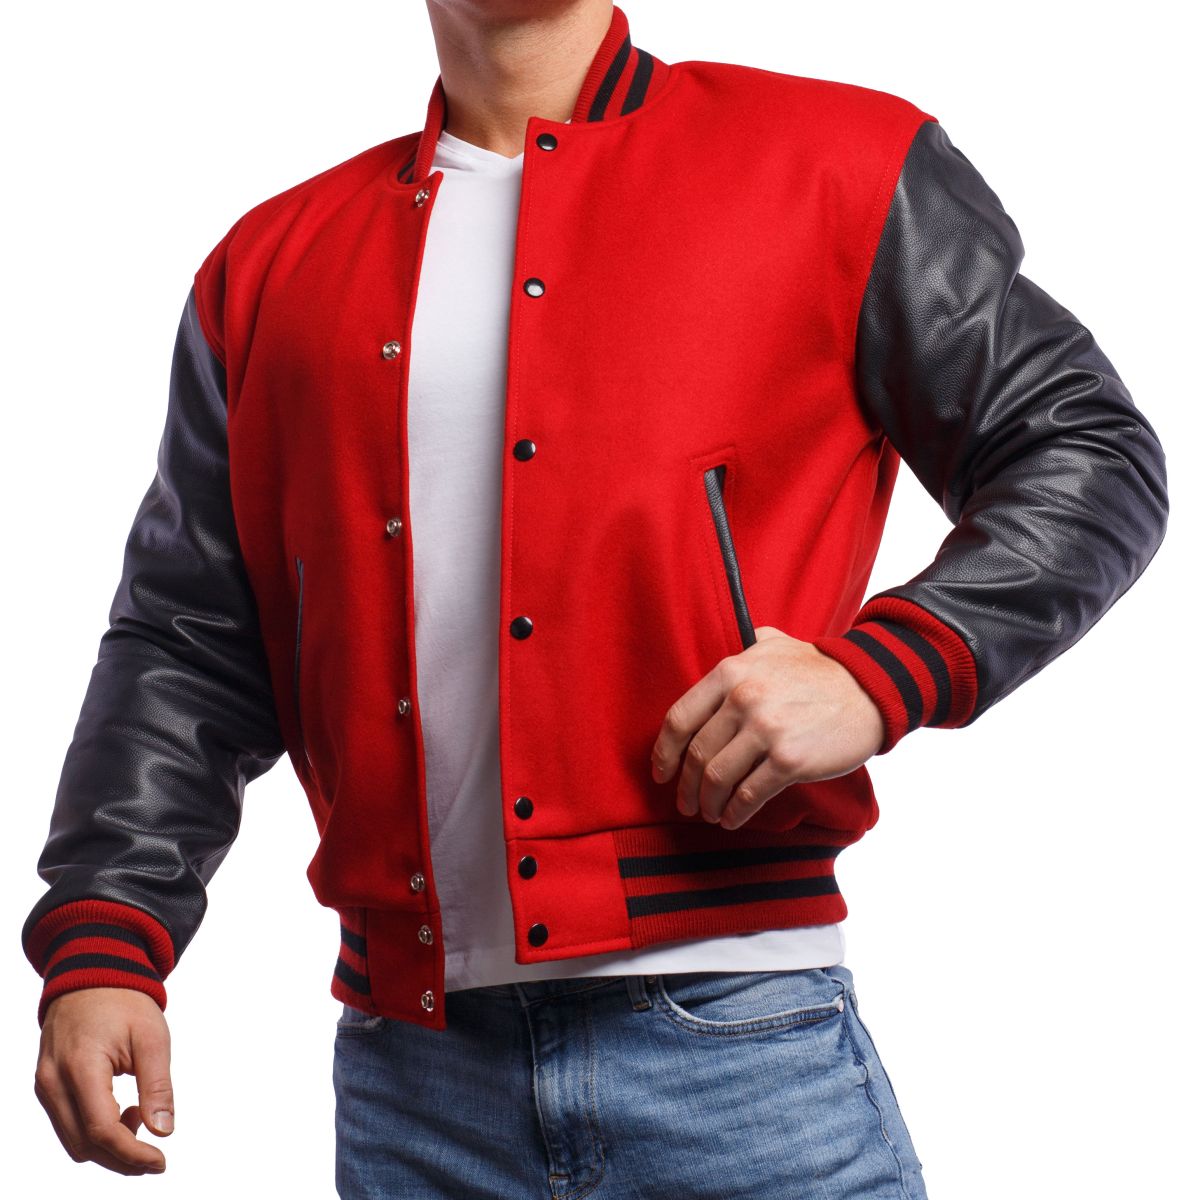 Classic Red Varsity Fleece Baseball College Bomber Jacket For Men And Women  From Janet1221, $25.87 | DHgate.Com